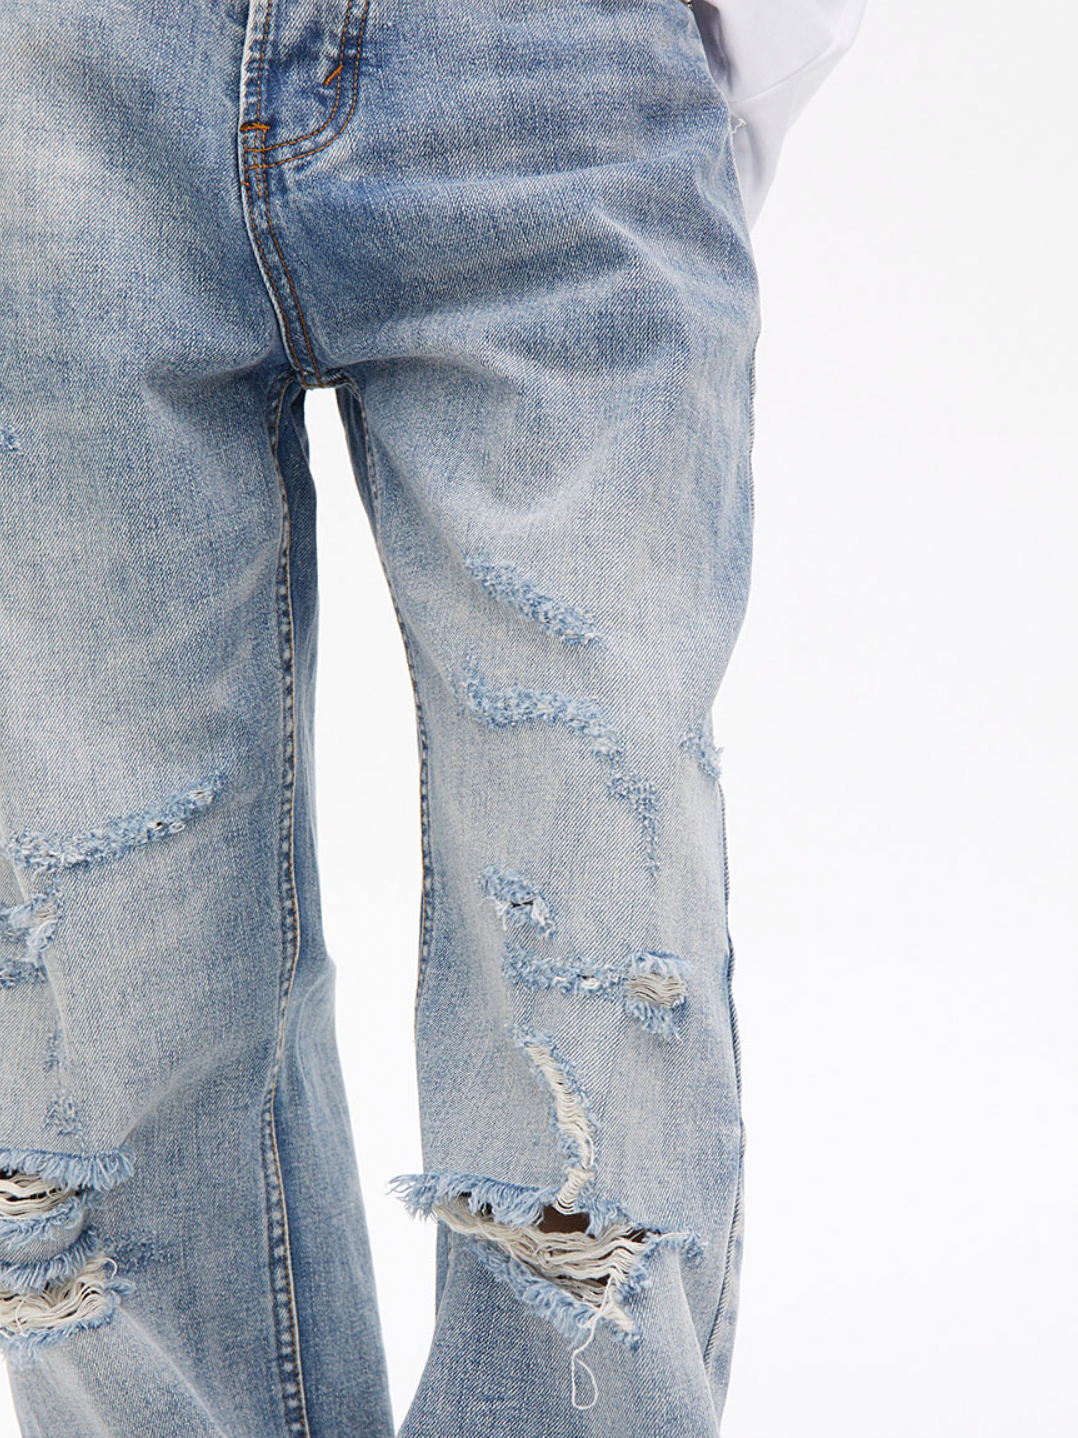 Washed Distressed Denim Jeans